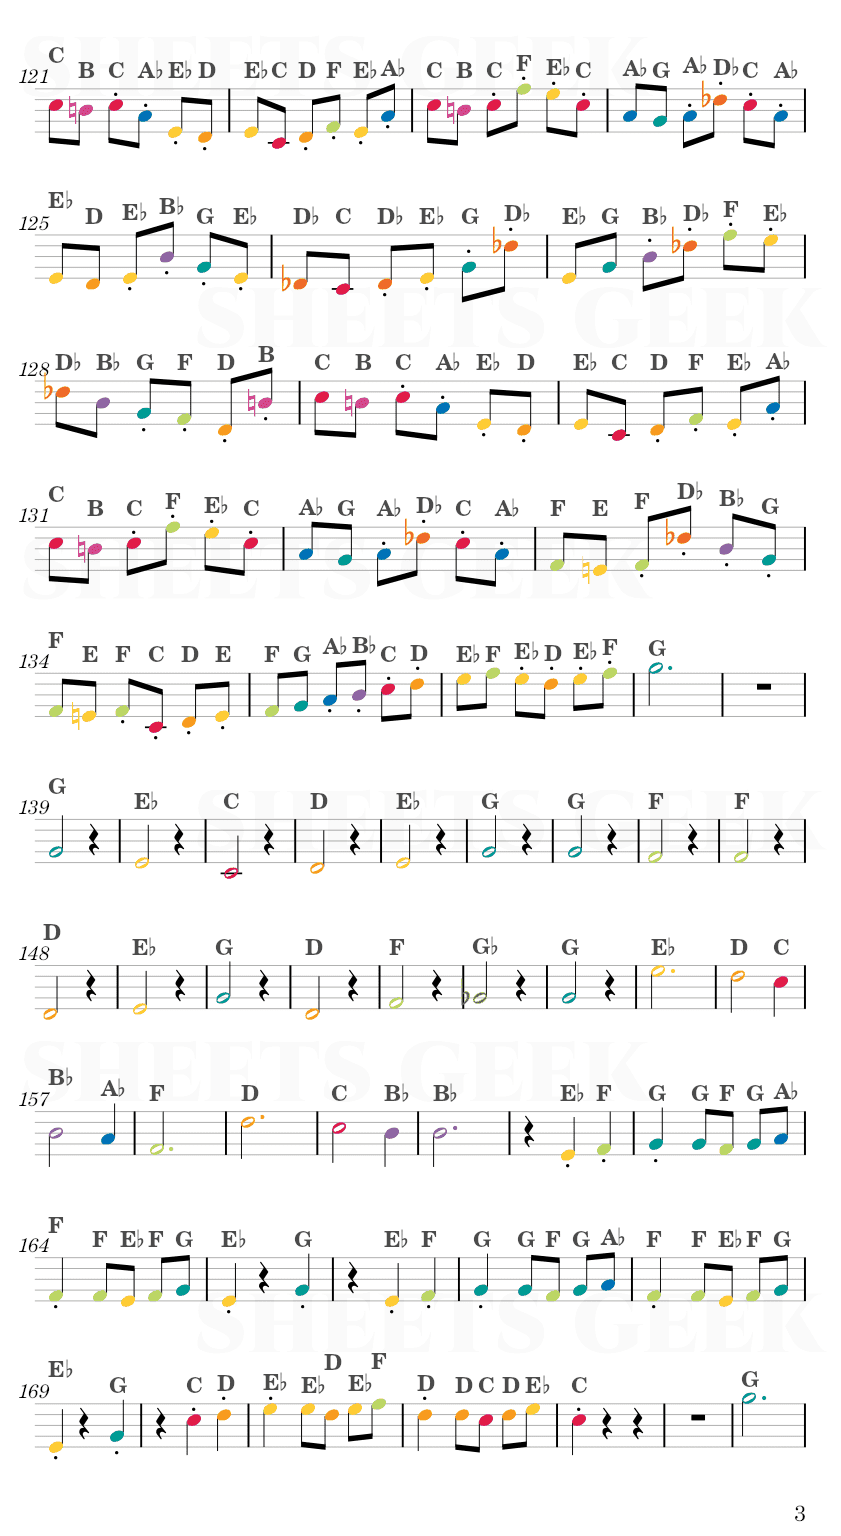 Waltz No. 2 - Dmitri Shostakovich Easy Sheet Music Free for piano, keyboard, flute, violin, sax, cello page 3